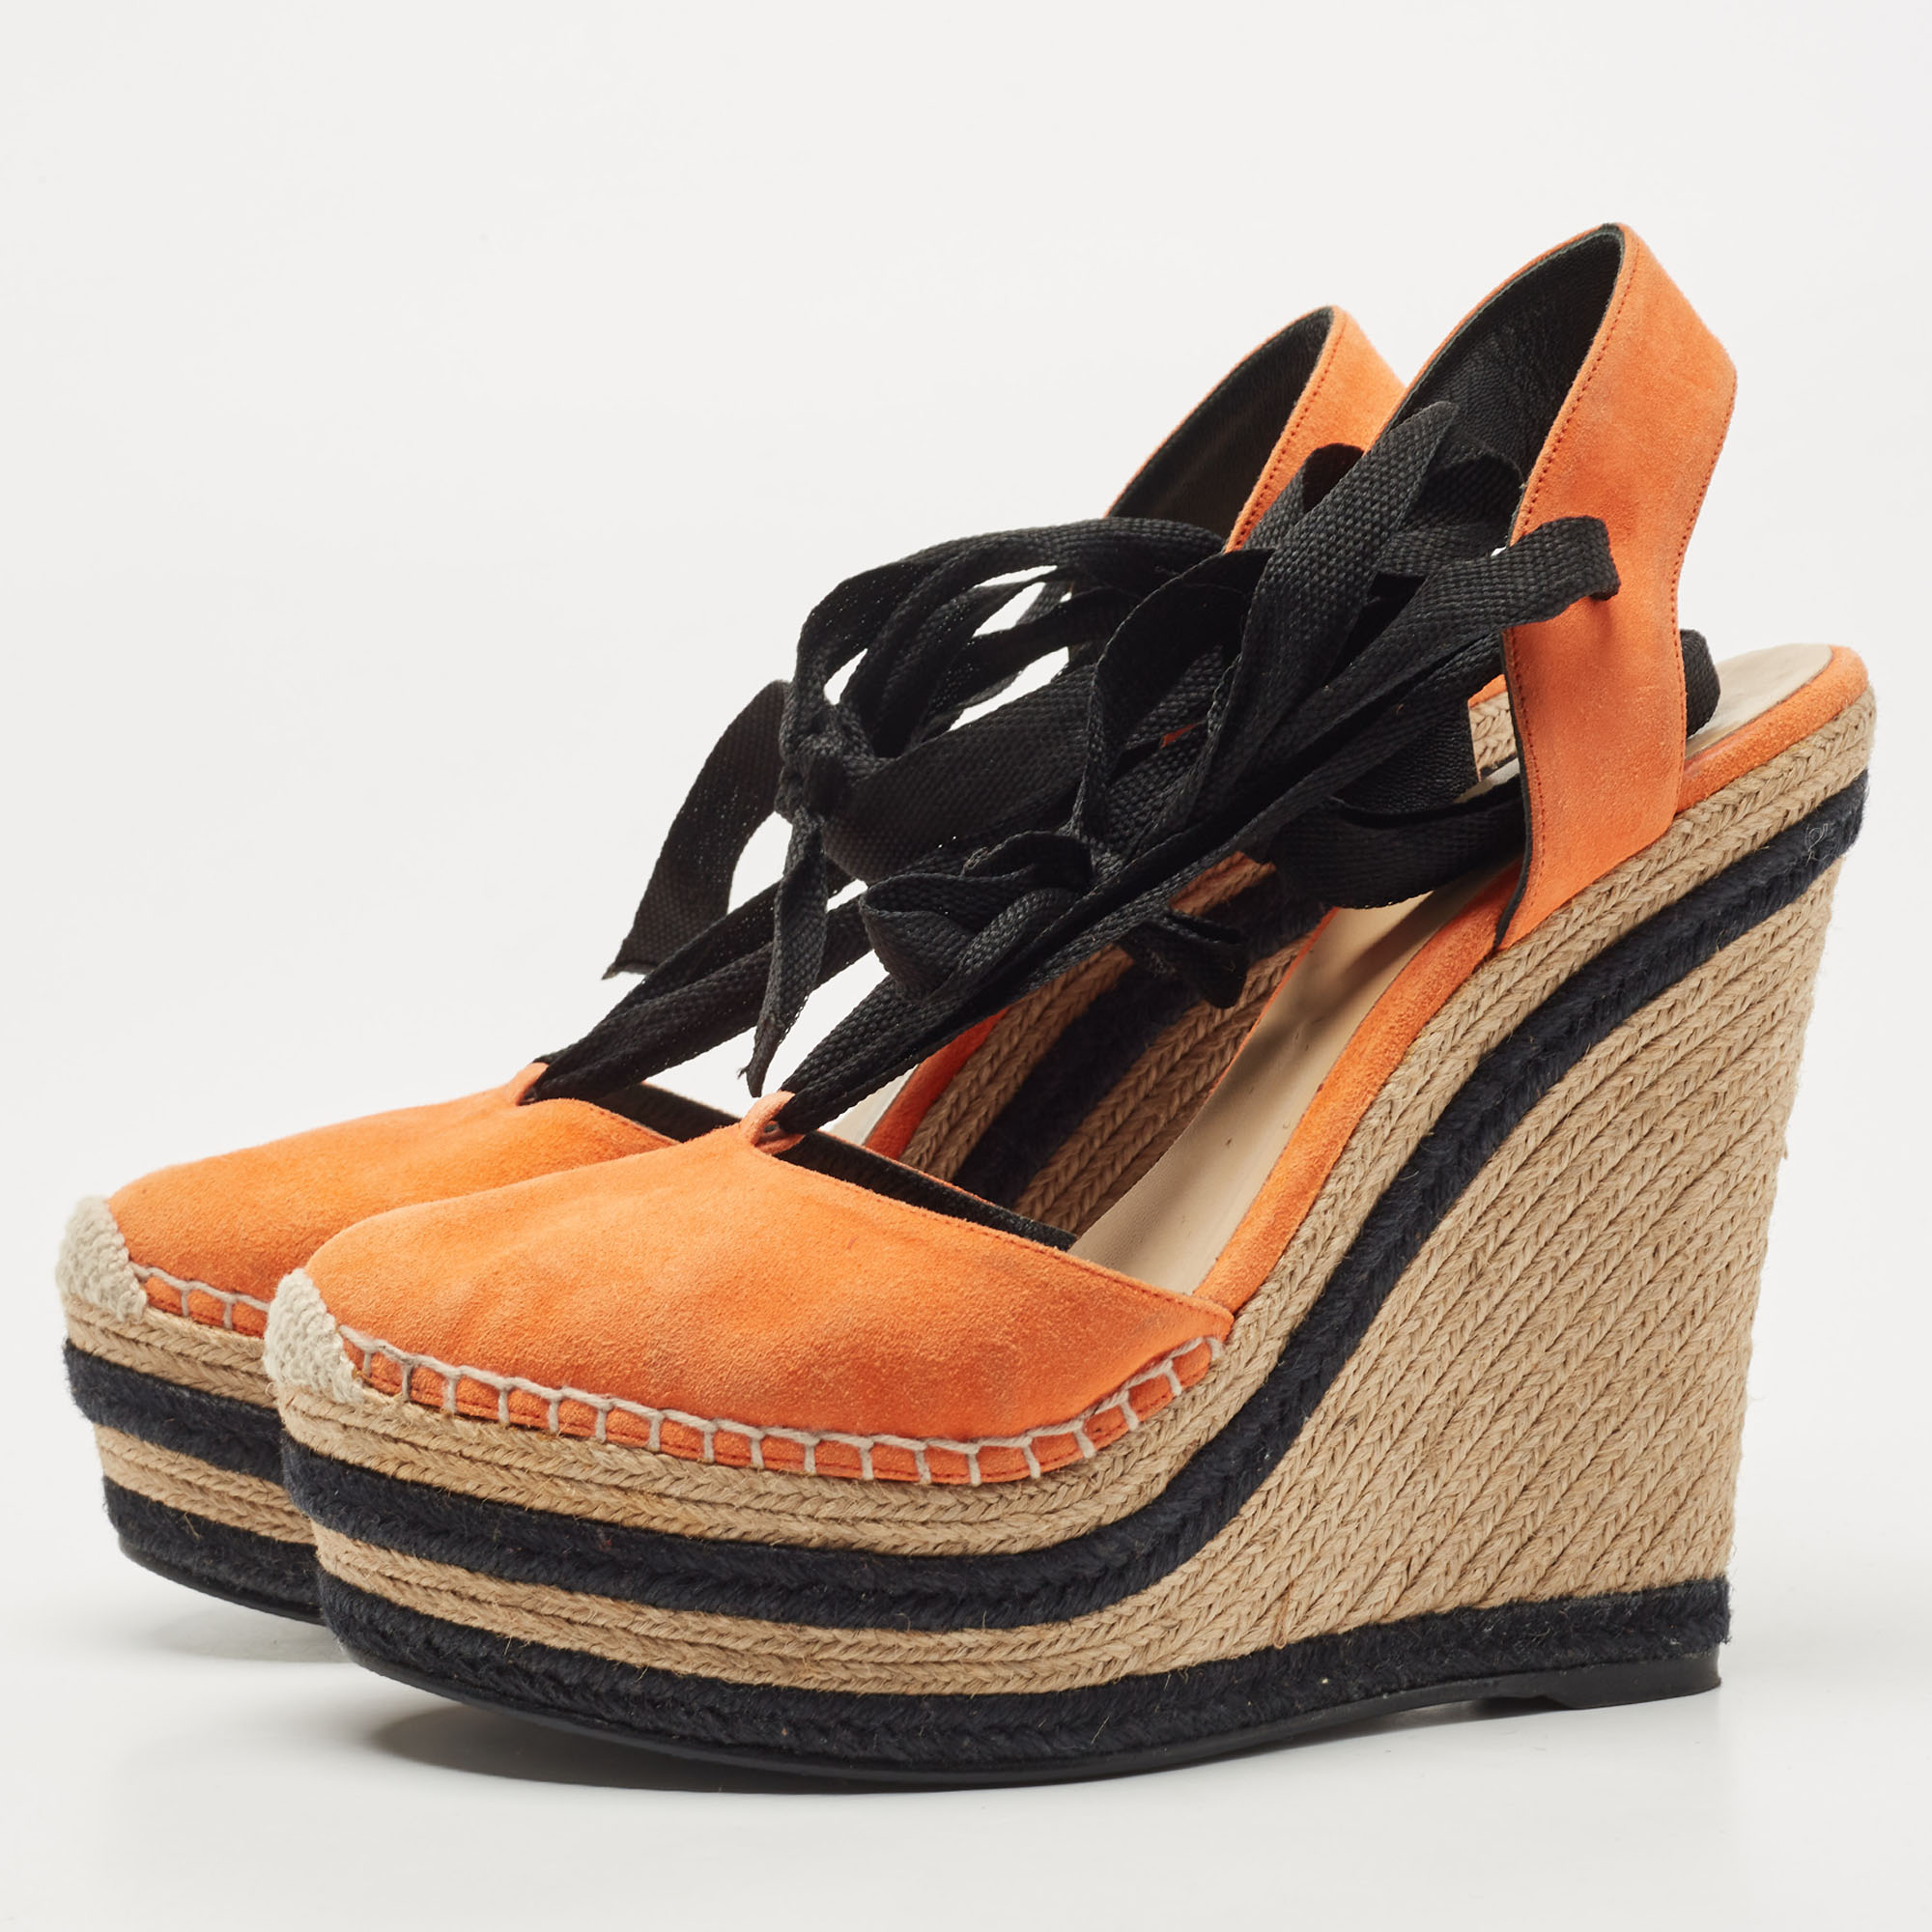 

Gucci Orange/Black Suede Wedge Espadrille Platform Ankle Wrap Sandals Size